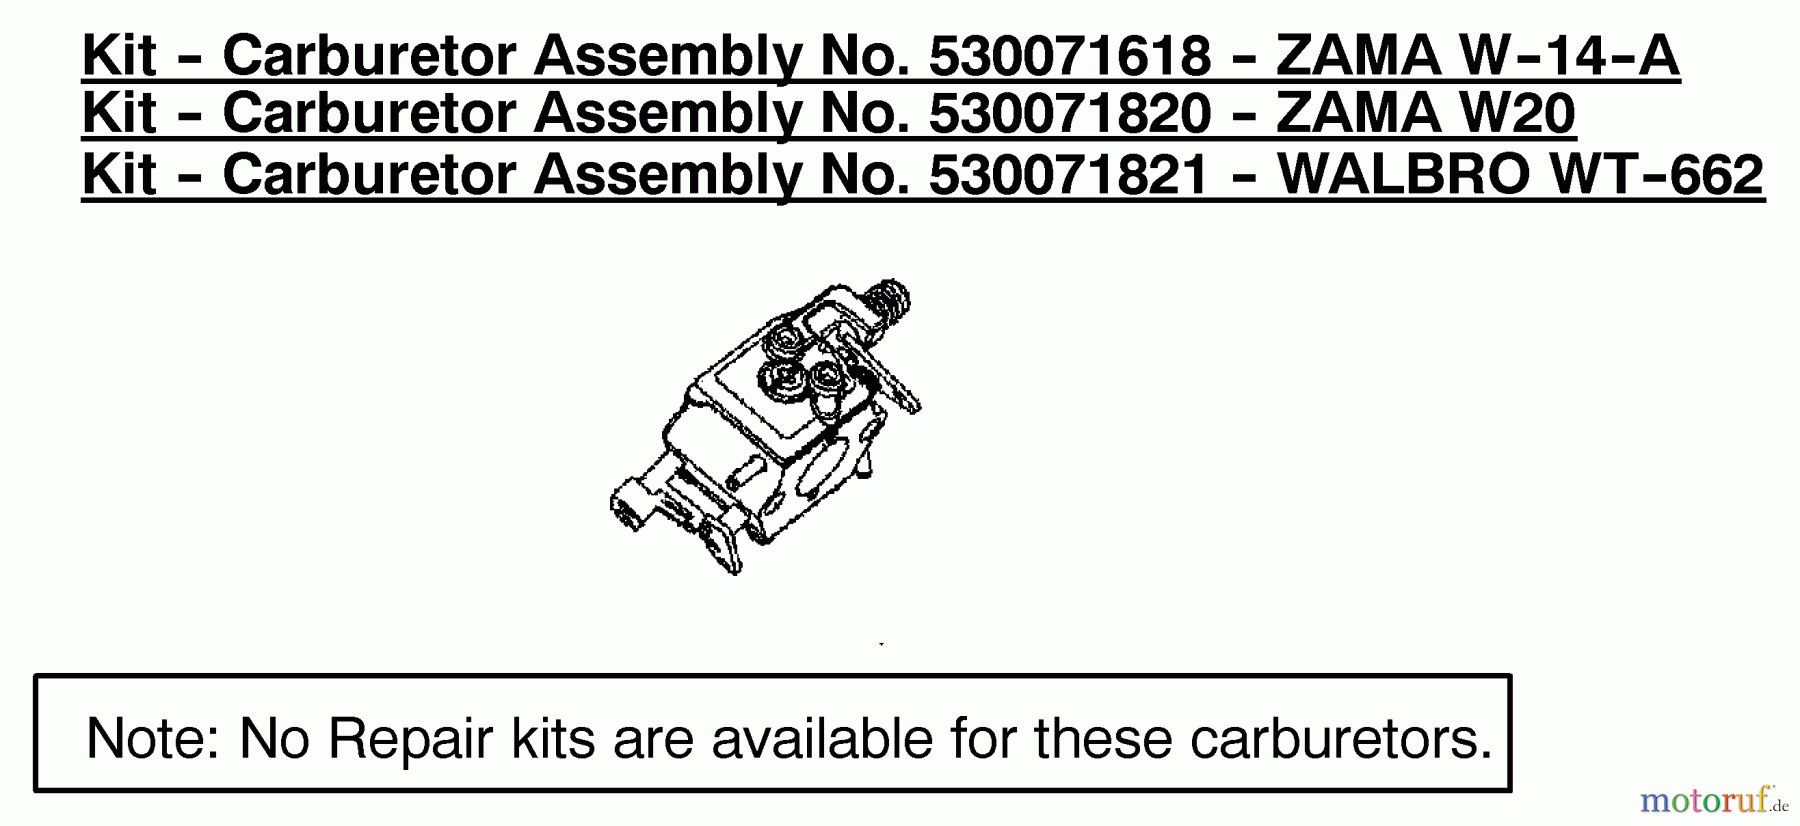  Poulan / Weed Eater Motorsägen 1975 (Type 4) - Poulan Woodshark Chainsaw Carburetor Assembly (Zama W-14-A) P/N 530071618